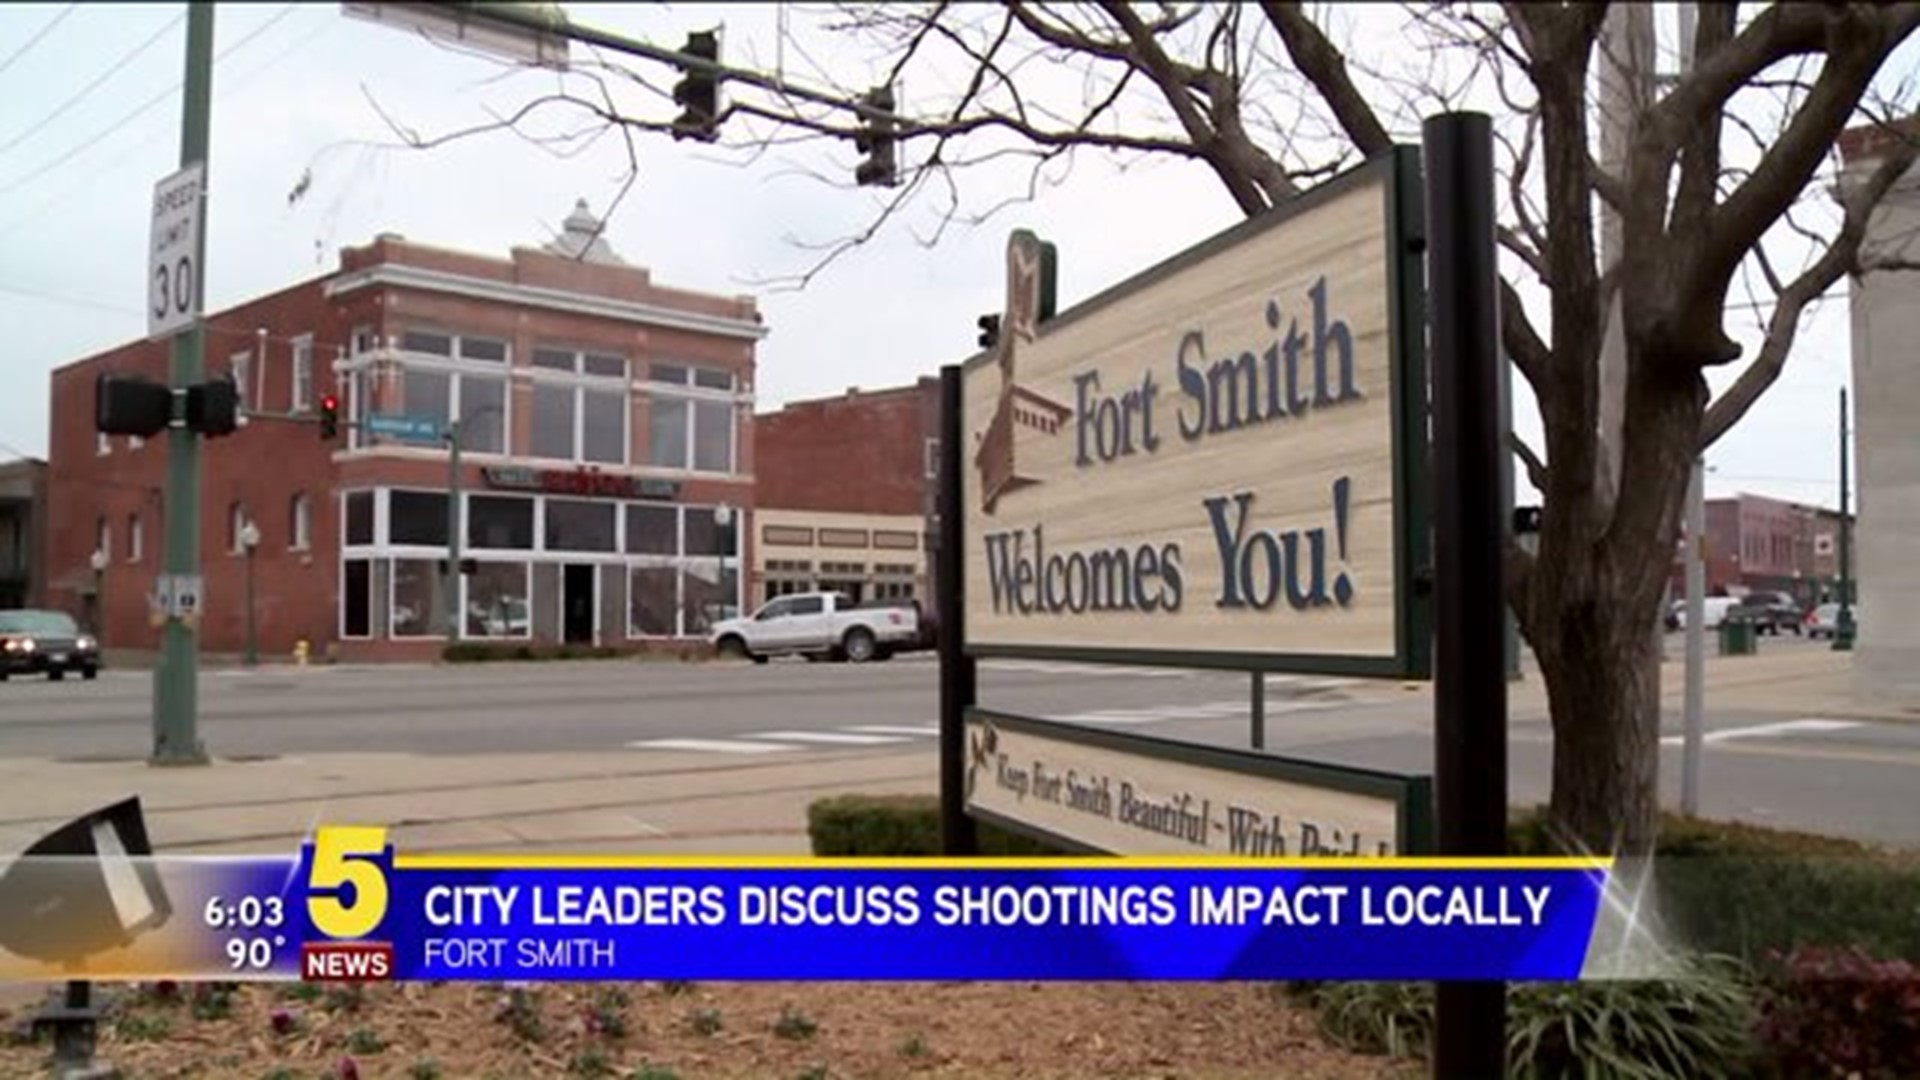 City Leaders Discuss Shootings